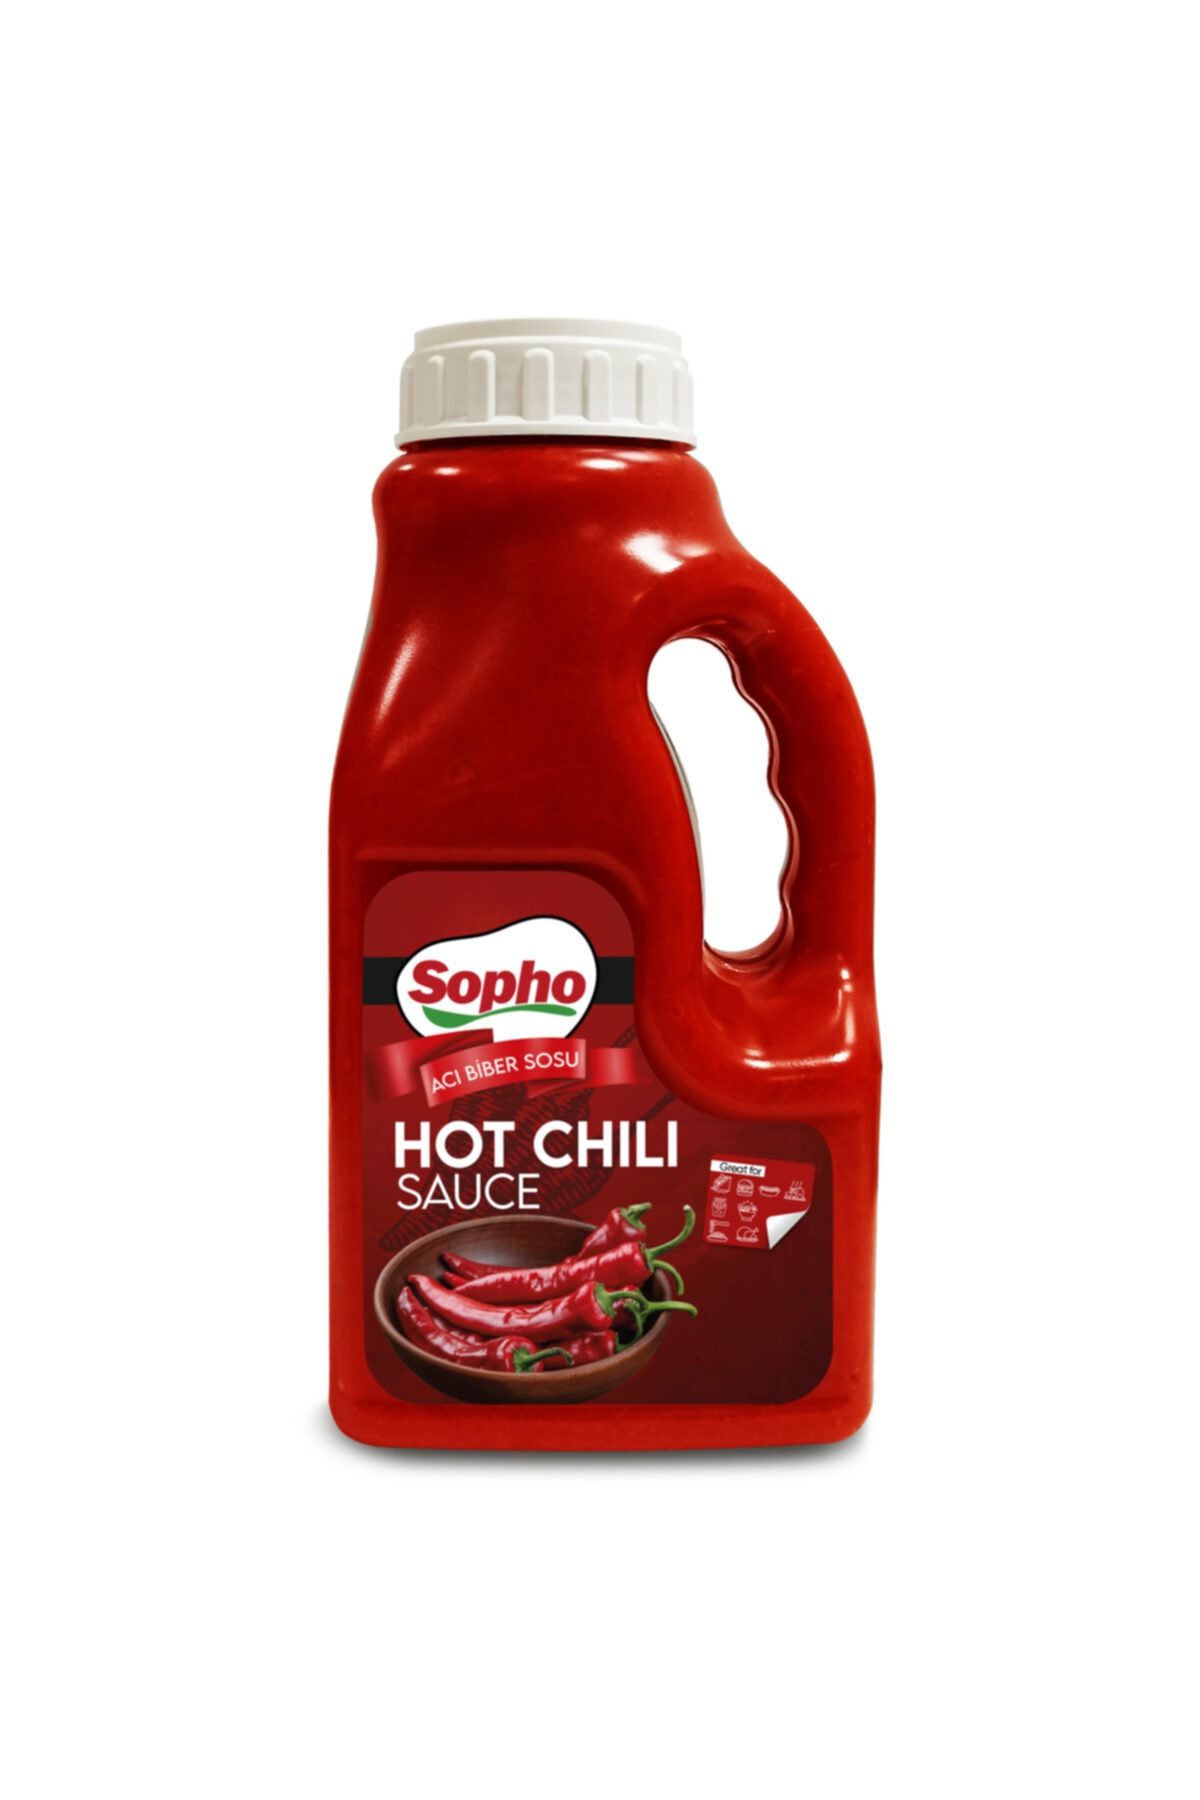 Sopho Hot Chili Sauce 2150 gr (ACI BİBER SOSU)